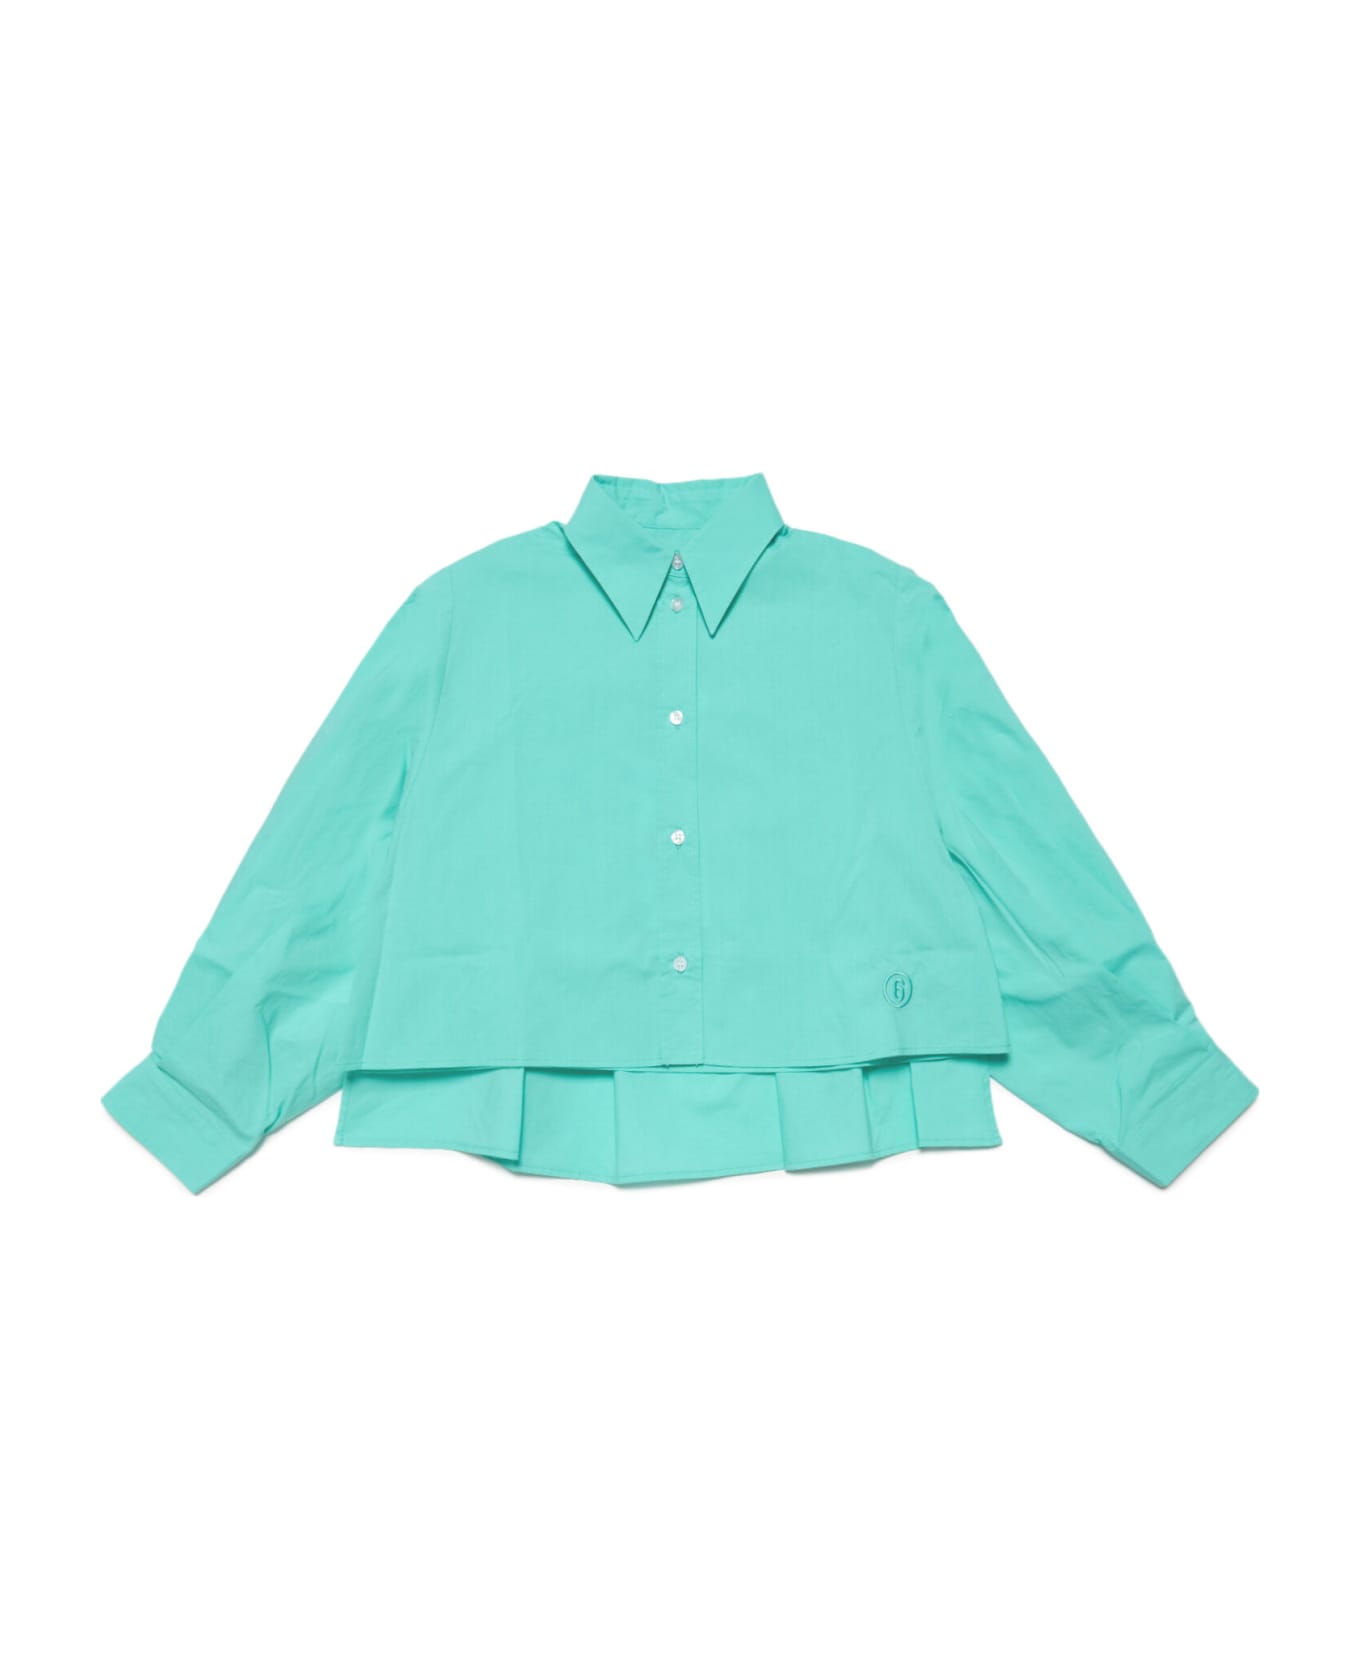 MM6 Maison Margiela Mm6c11u Shirt Maison Margiela Aquamarine Avant-garde Style Poplin Shirt - Bright marine